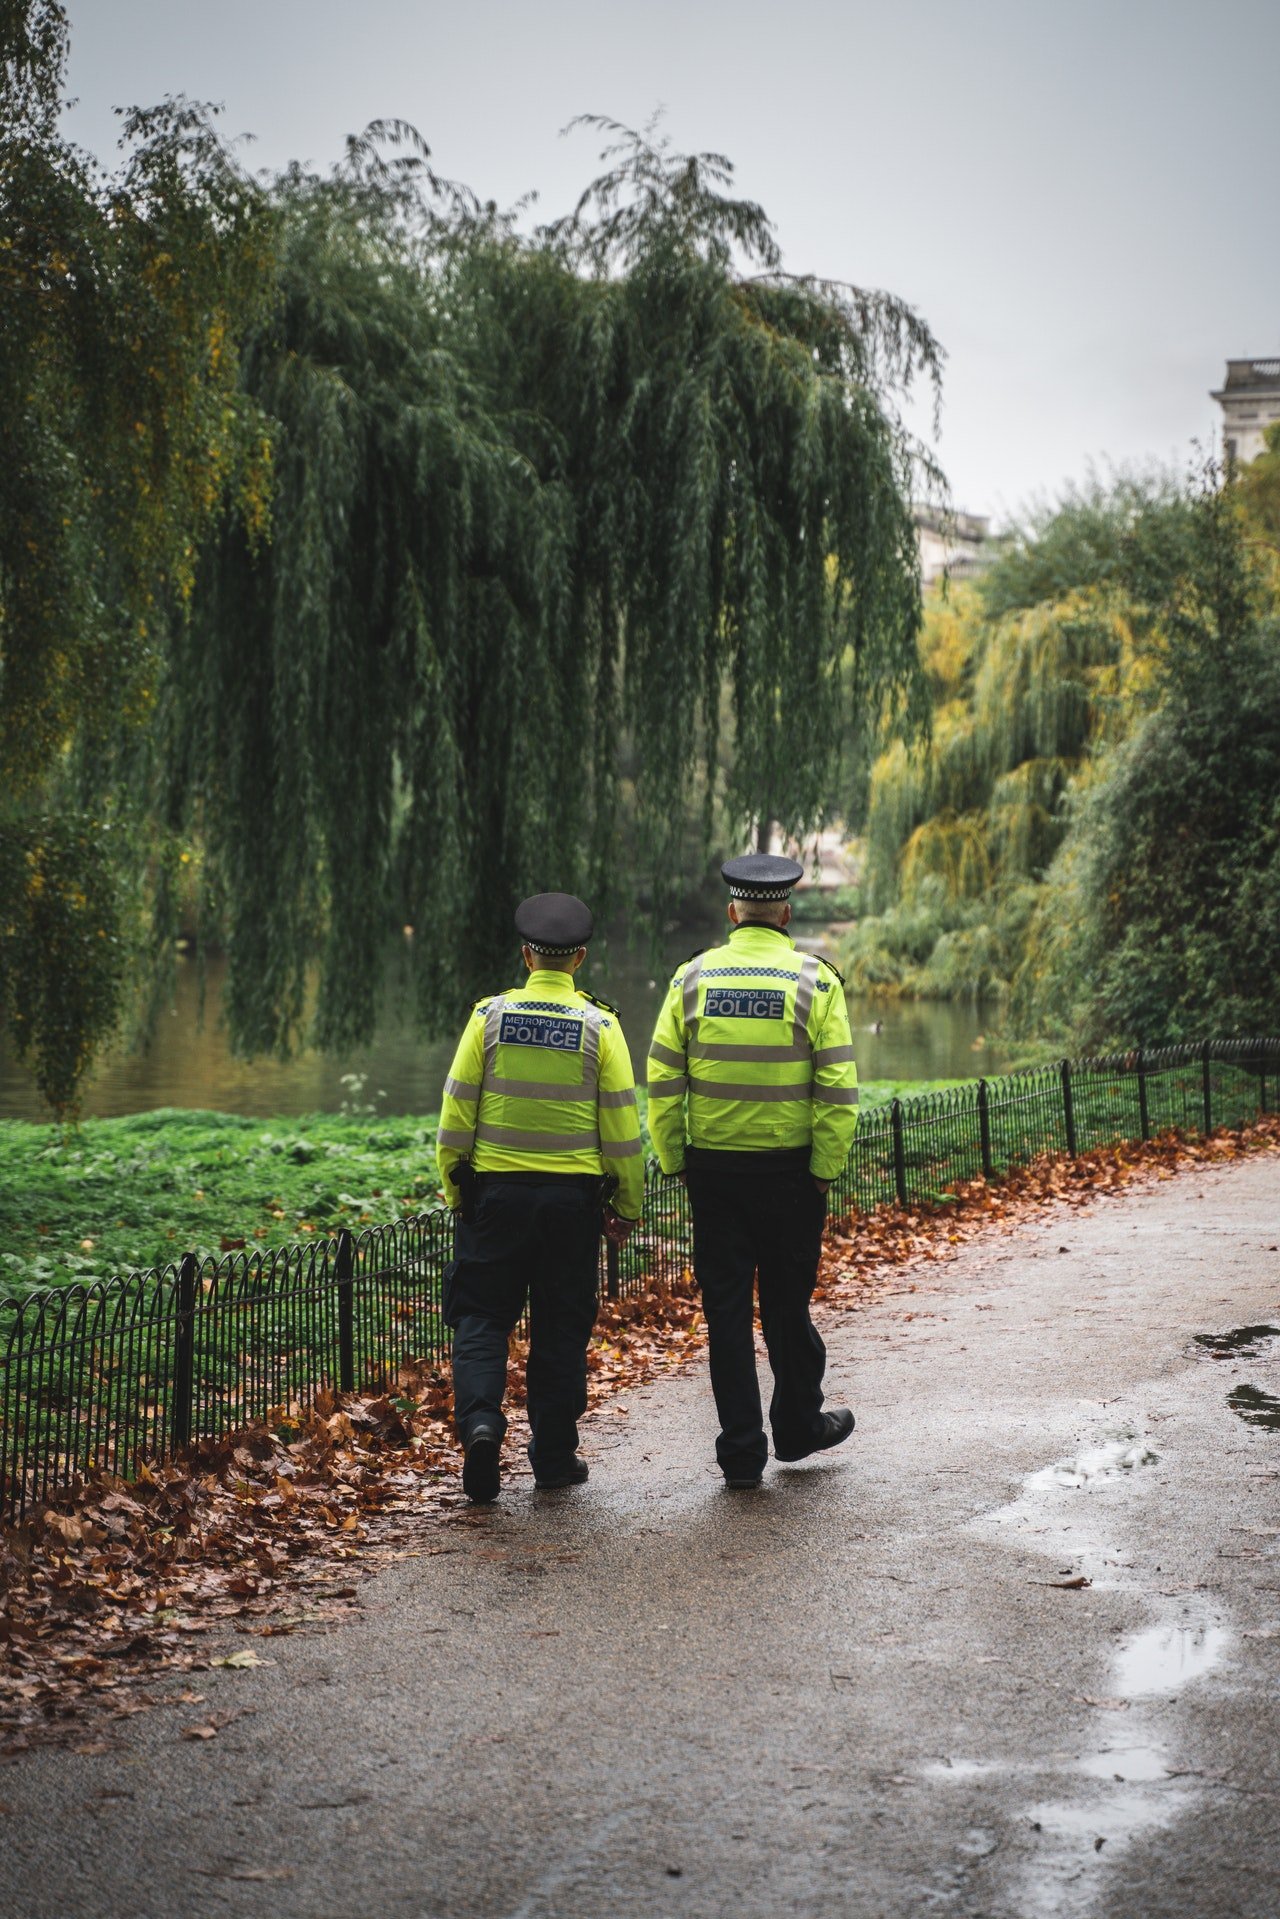 Two police men walking along the street | Photo: Pexels